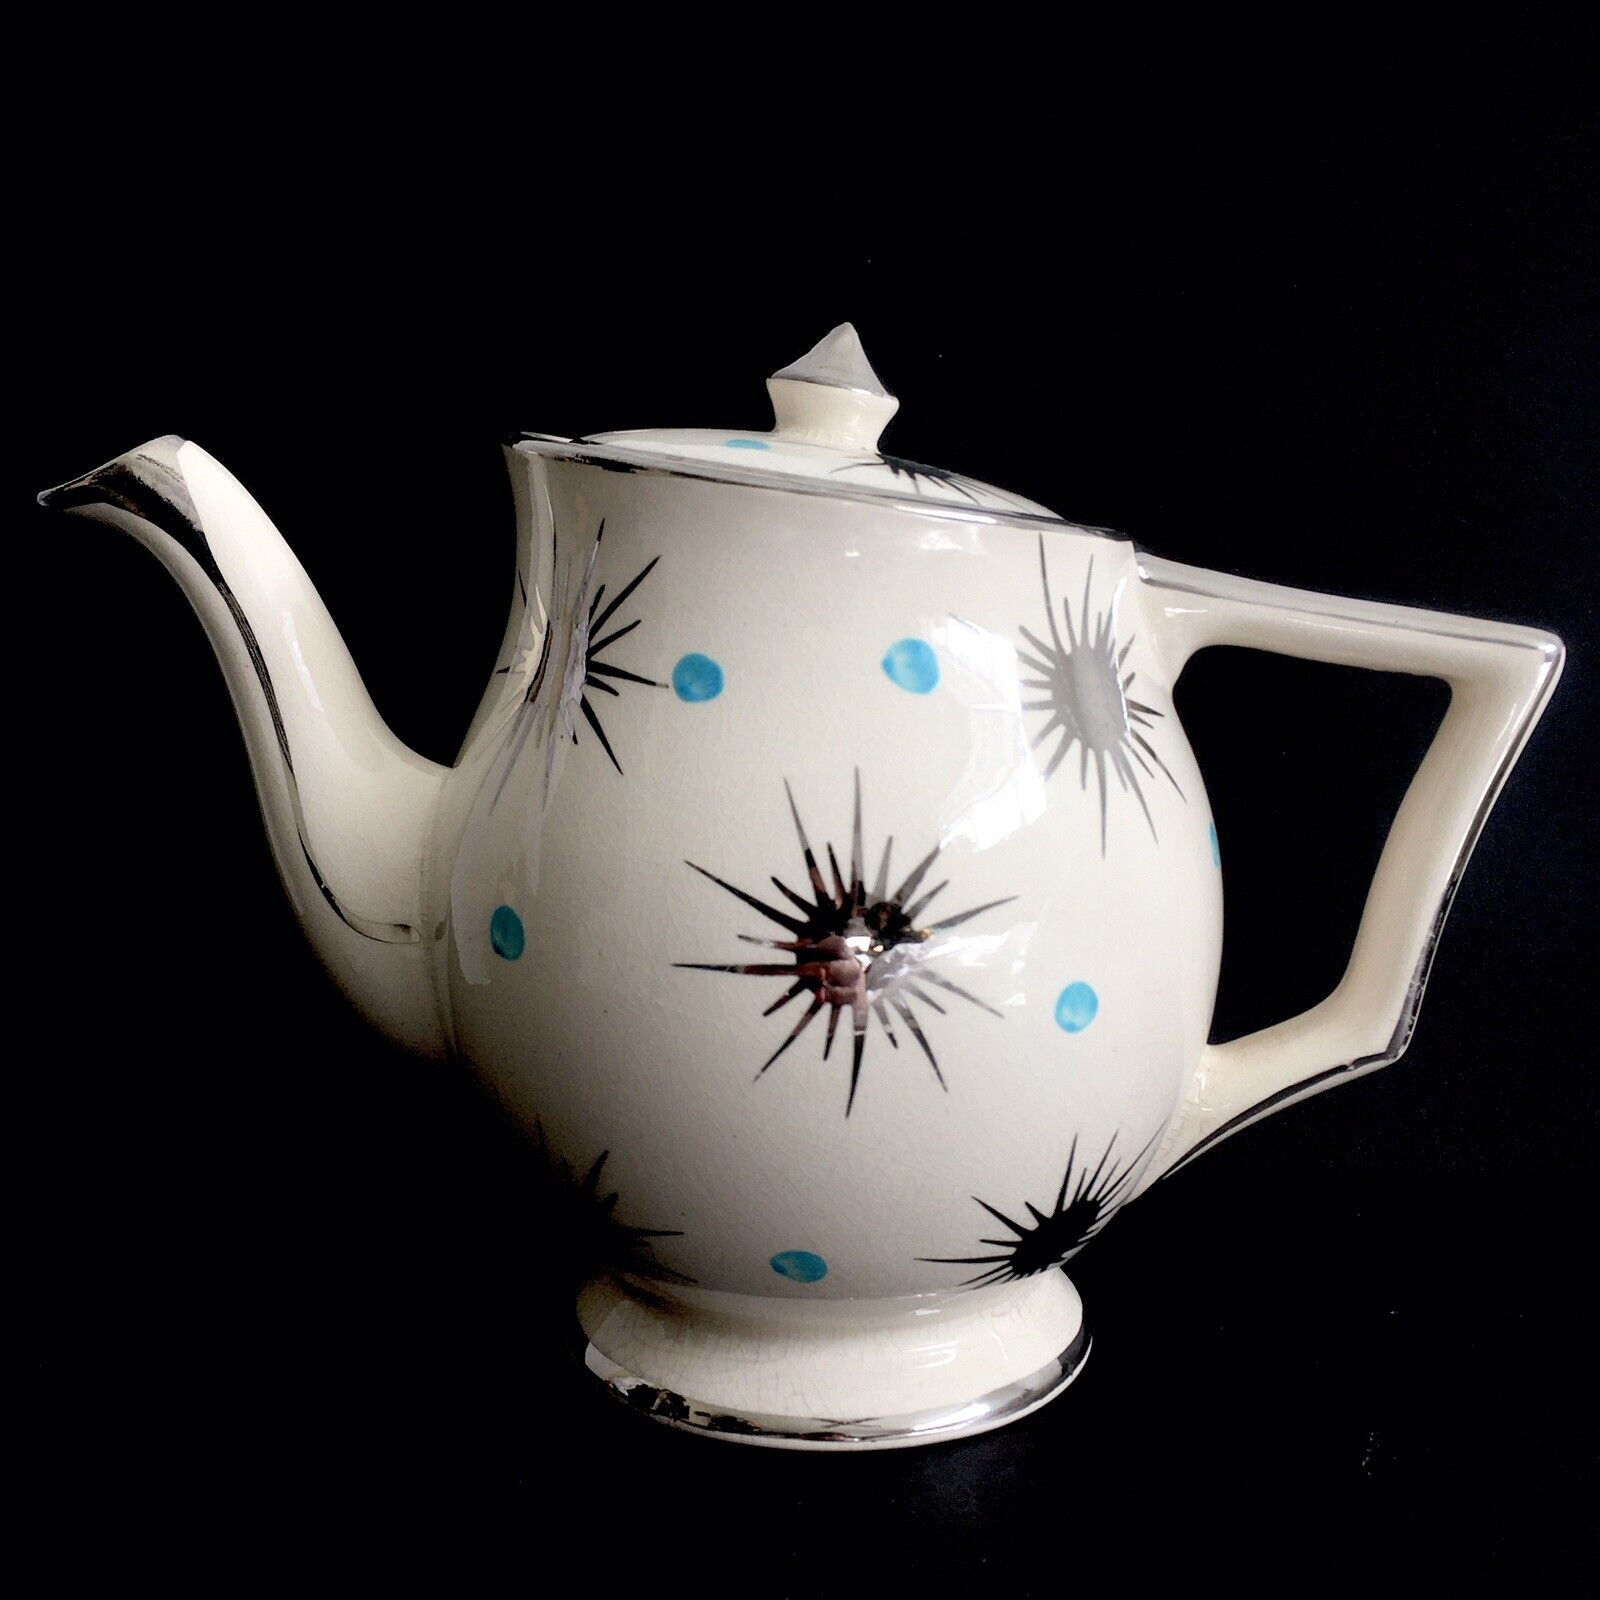 Vintage 1950s Atomic Starburst Teapot by Arthur Wood Cream & Blue Space Age Rare